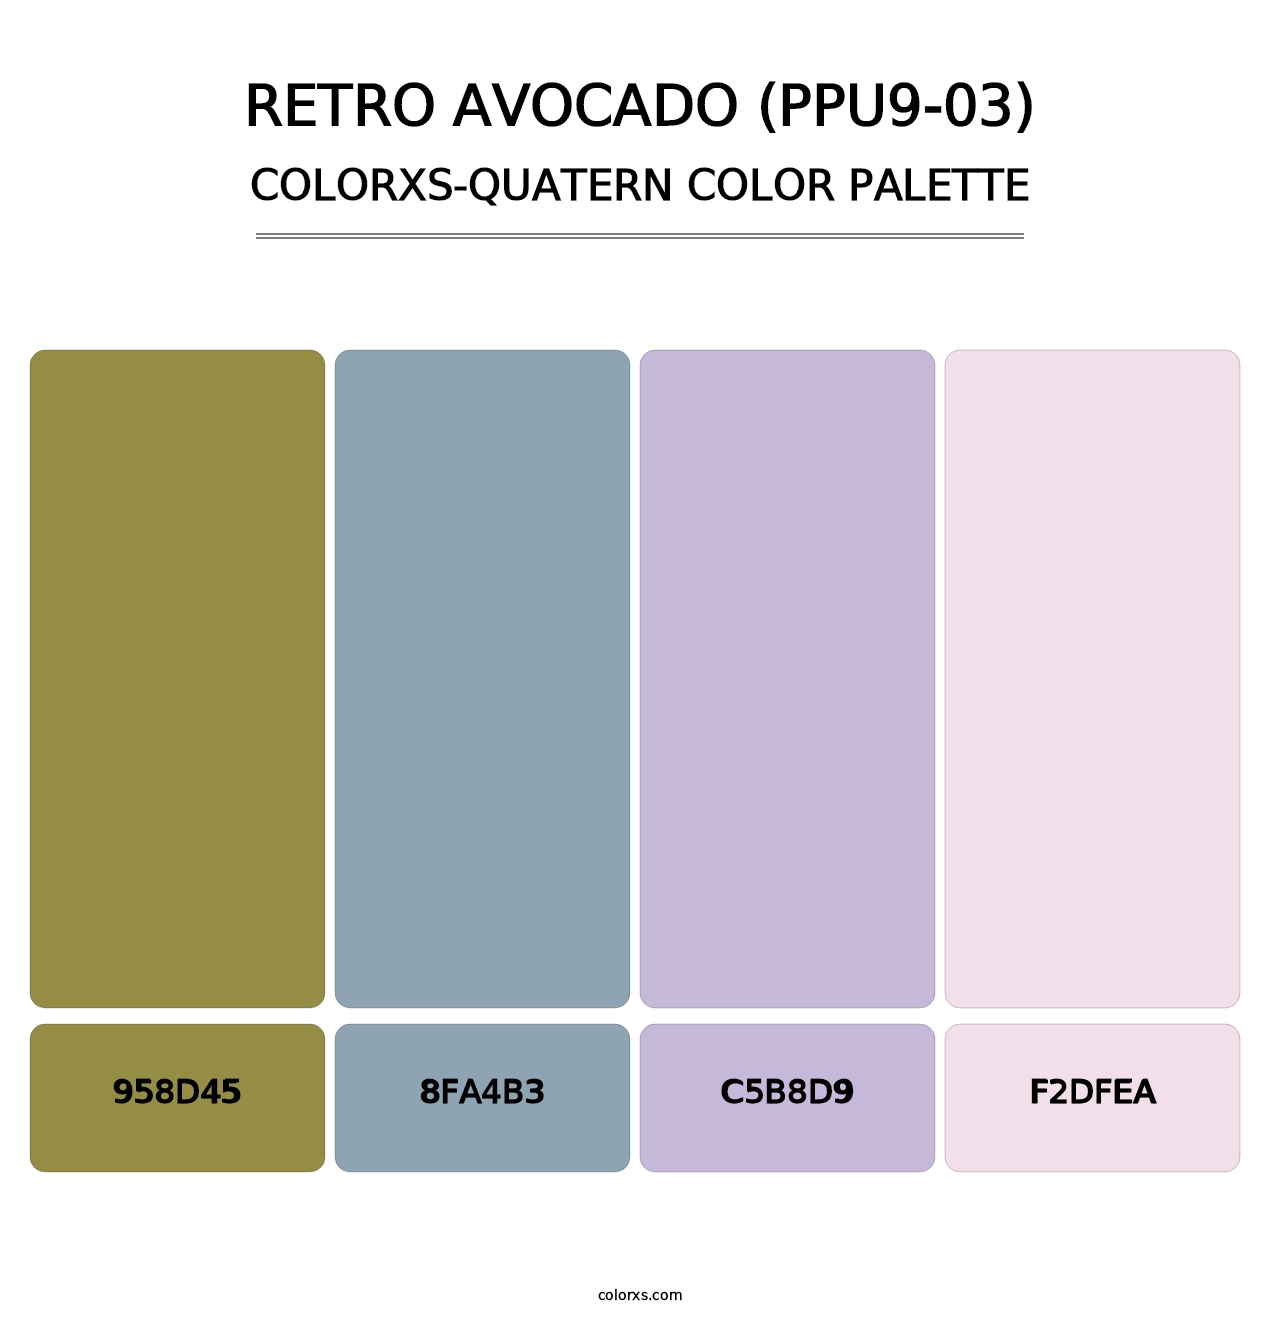 Retro Avocado (PPU9-03) - Colorxs Quatern Palette